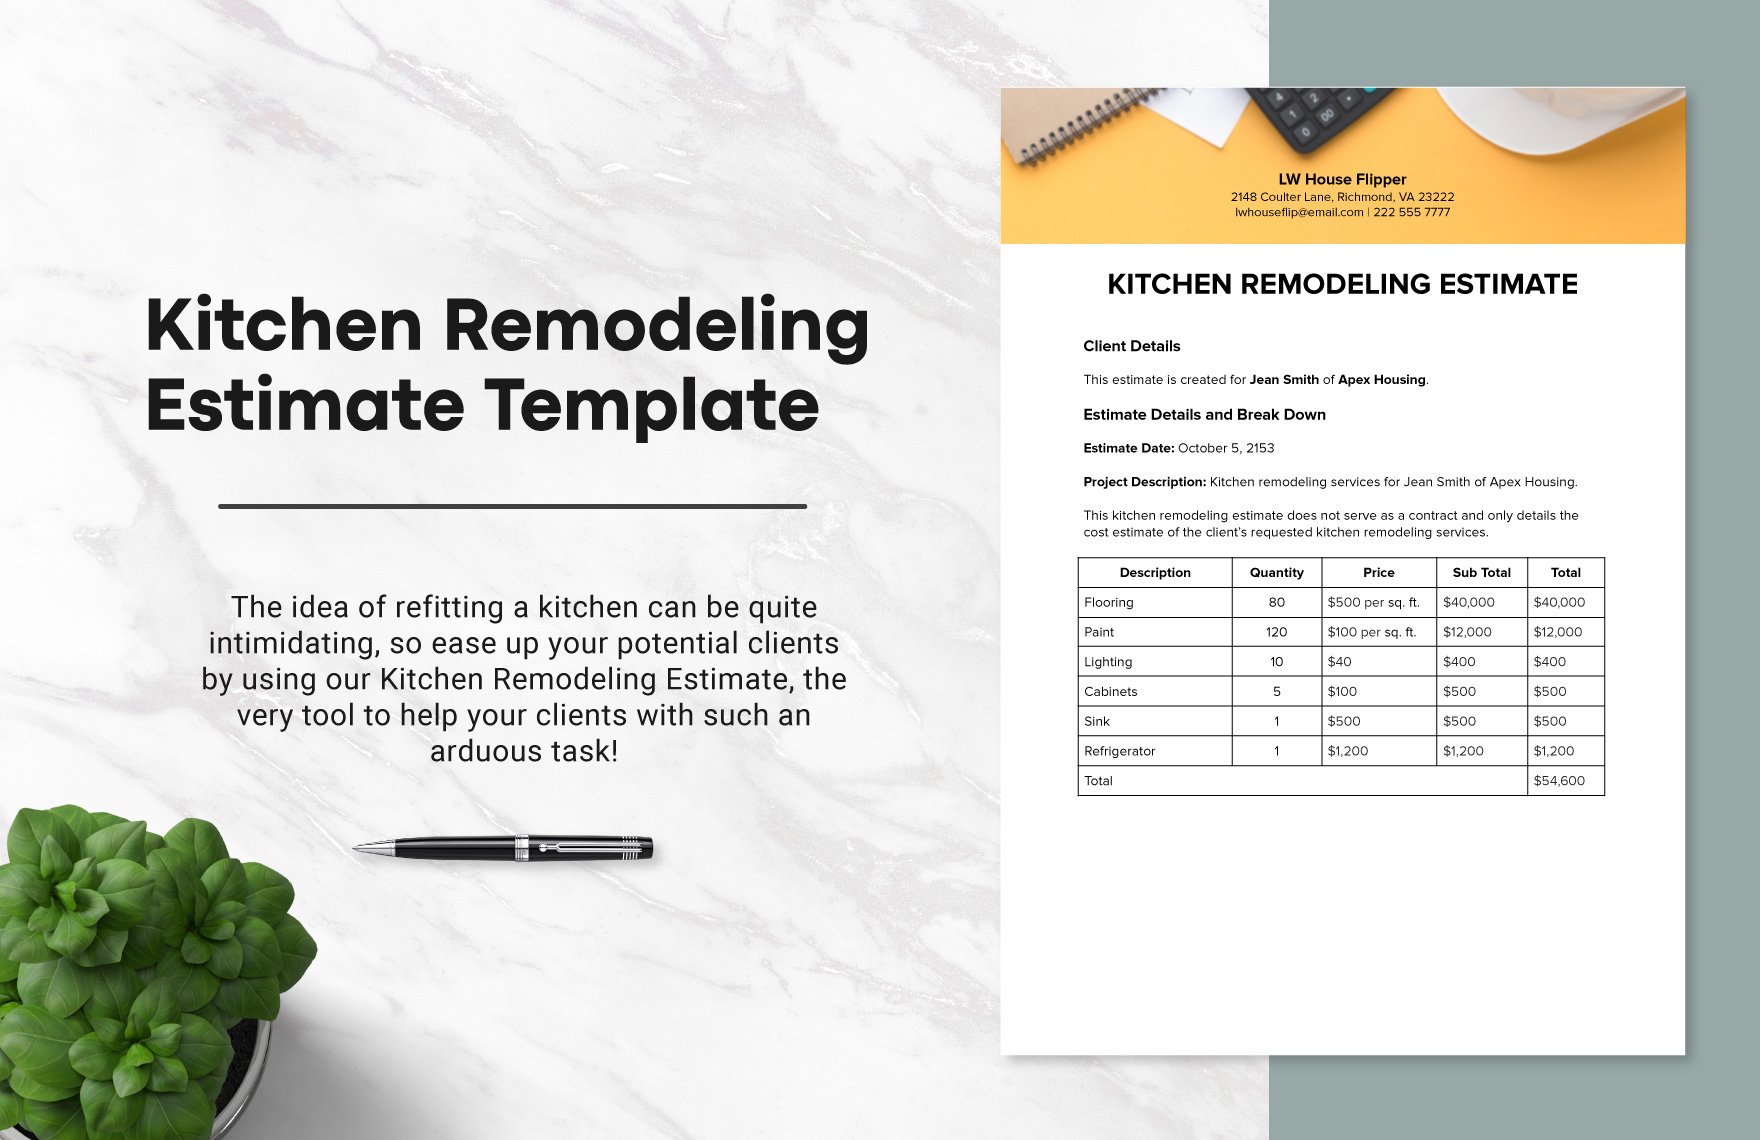 Kitchen Remodeling Estimate Template 4cn32 